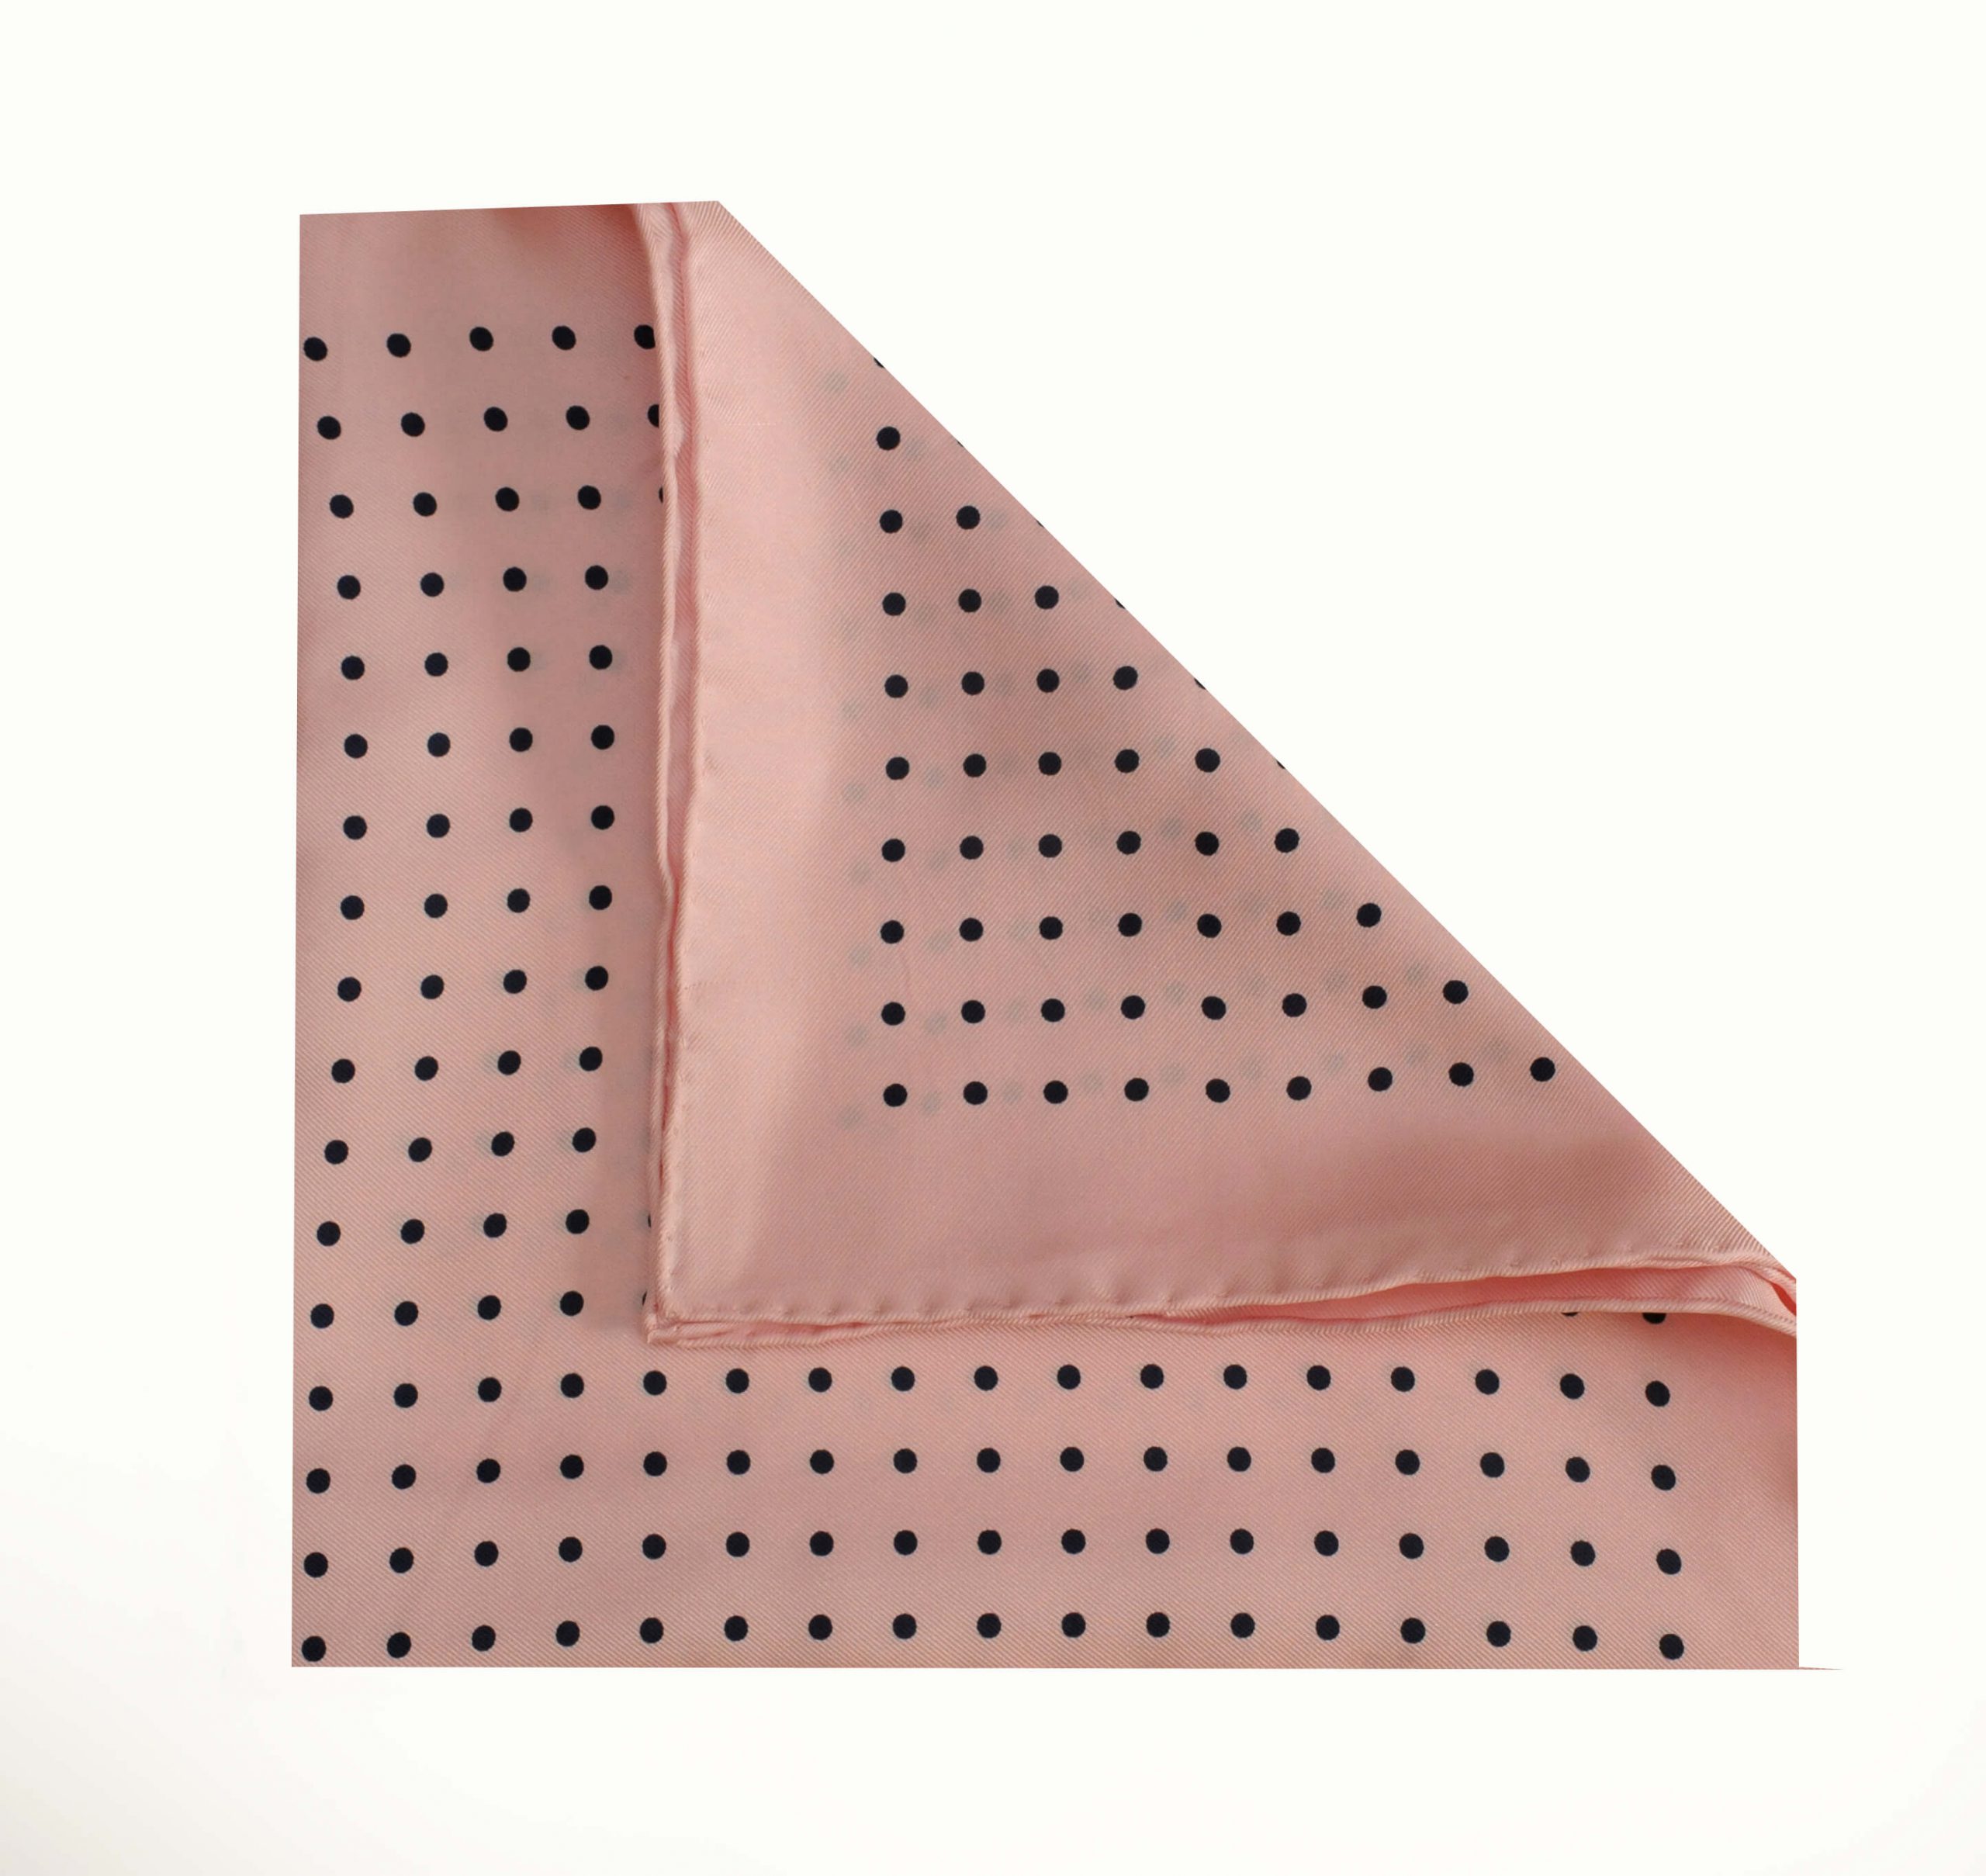 Jack - Polka Dot Silk Pocket Square in Pink with Black Spots